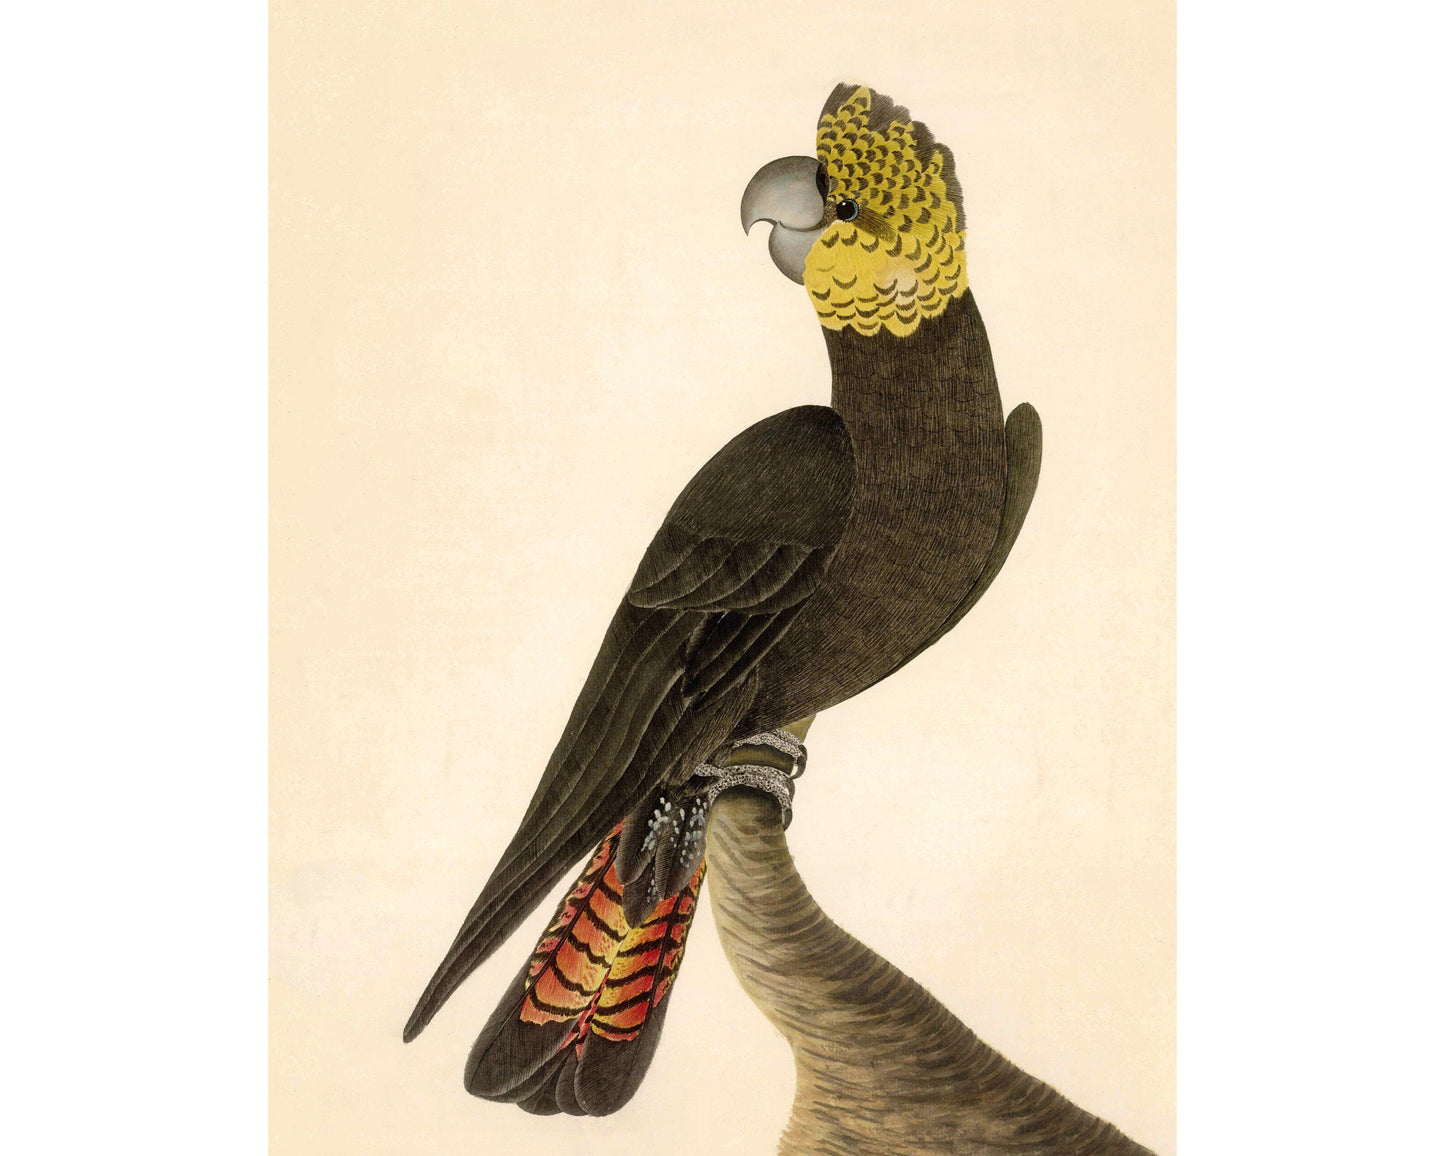 Antique cockatoo art | 18th century bird illustration | Natural history print | Animal wall décor | Modern vintage | Eco-friendly gift